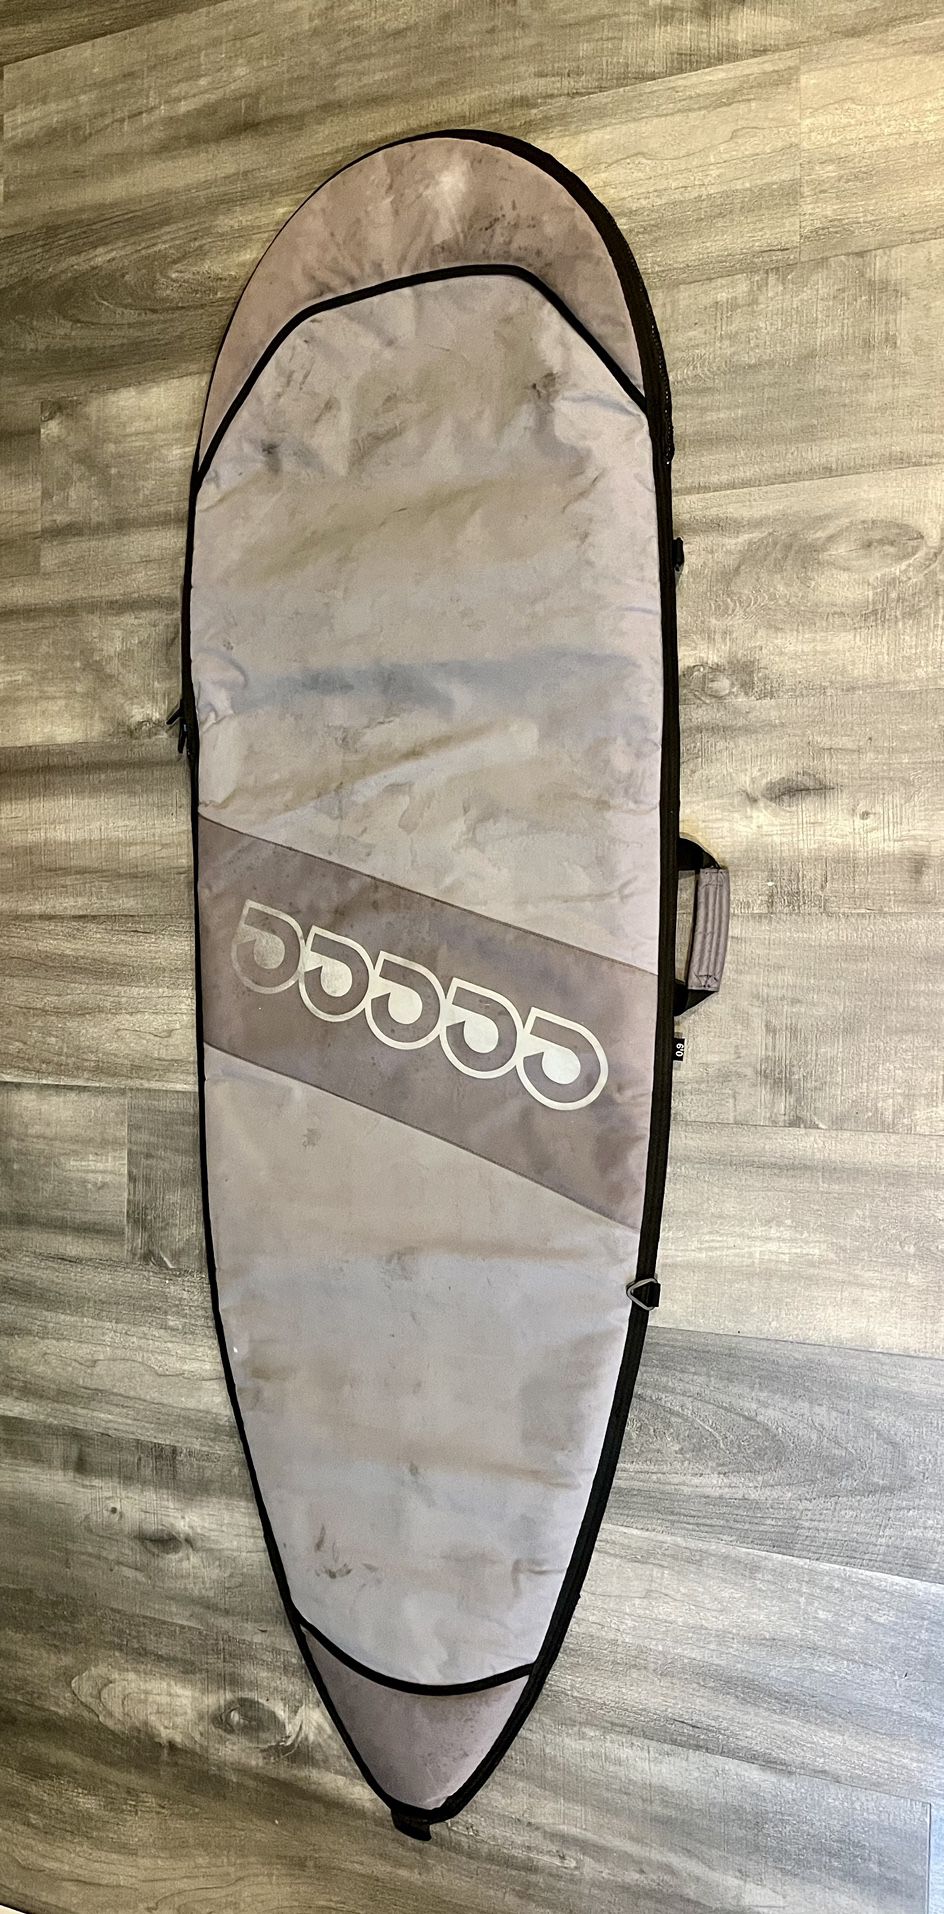 Curve 6ft Padded Travel Surfboard Bag